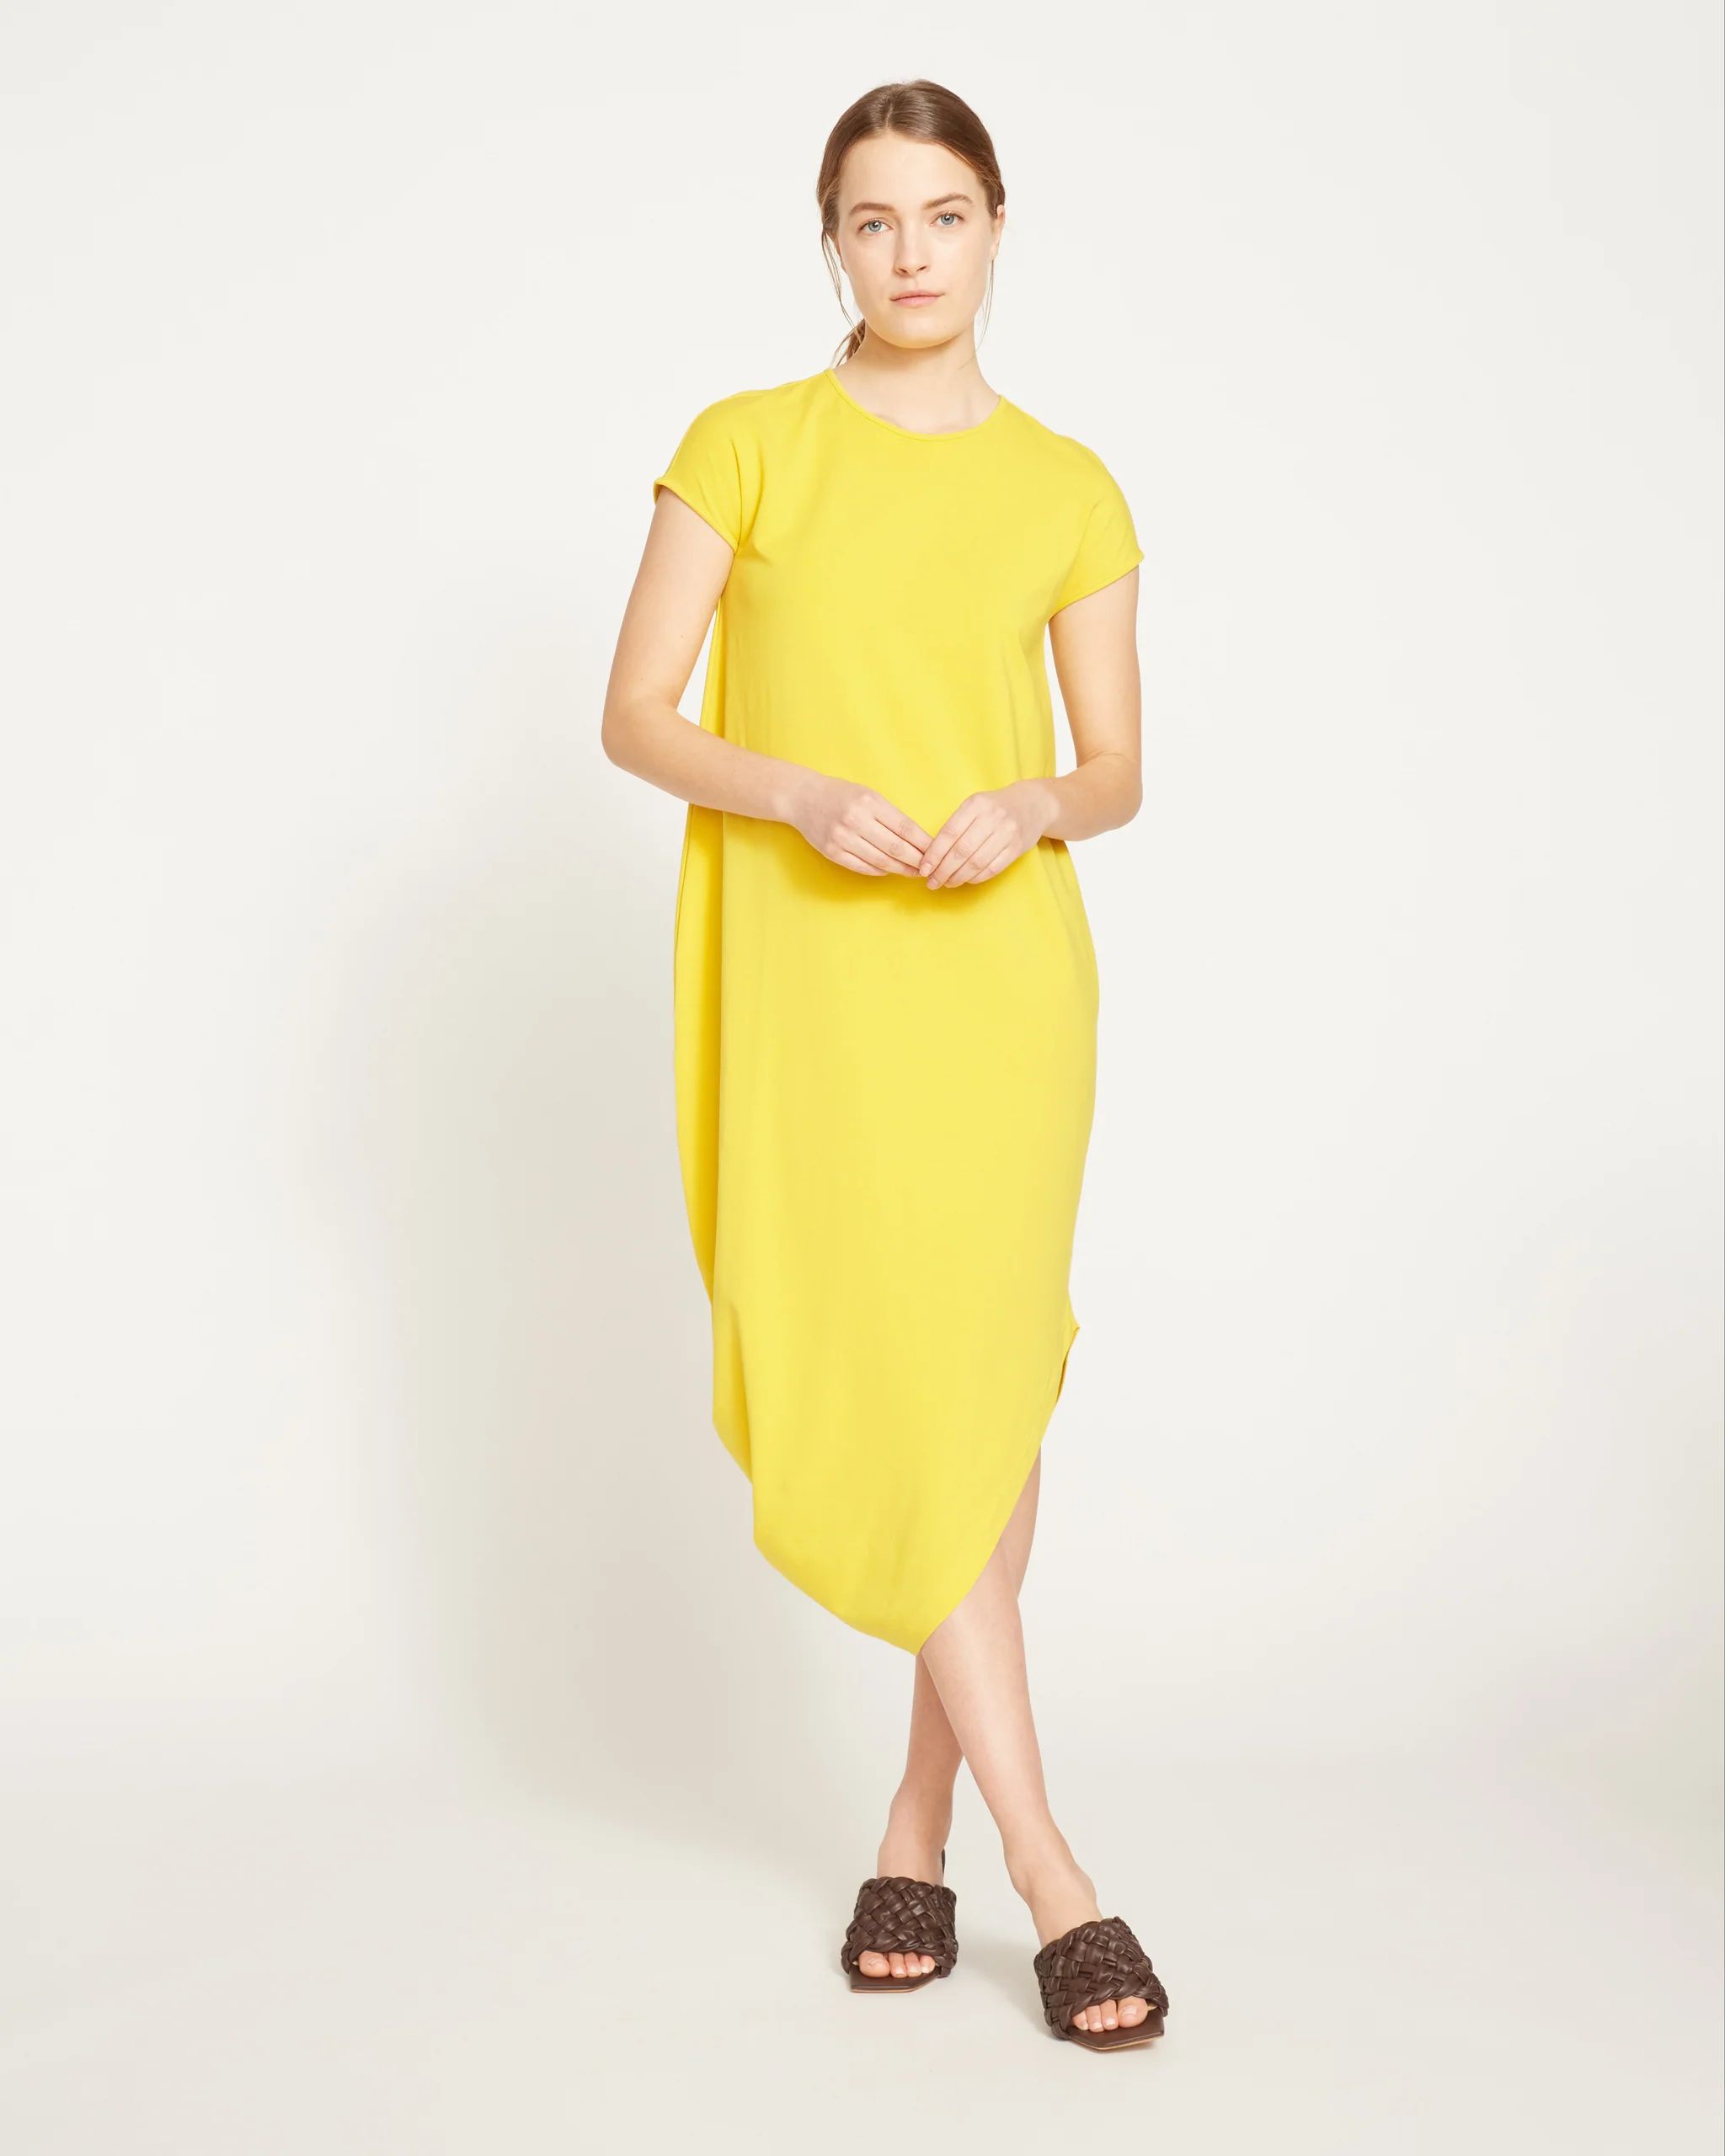 Iconic Geneva Dress - Yellow | Universal Standard